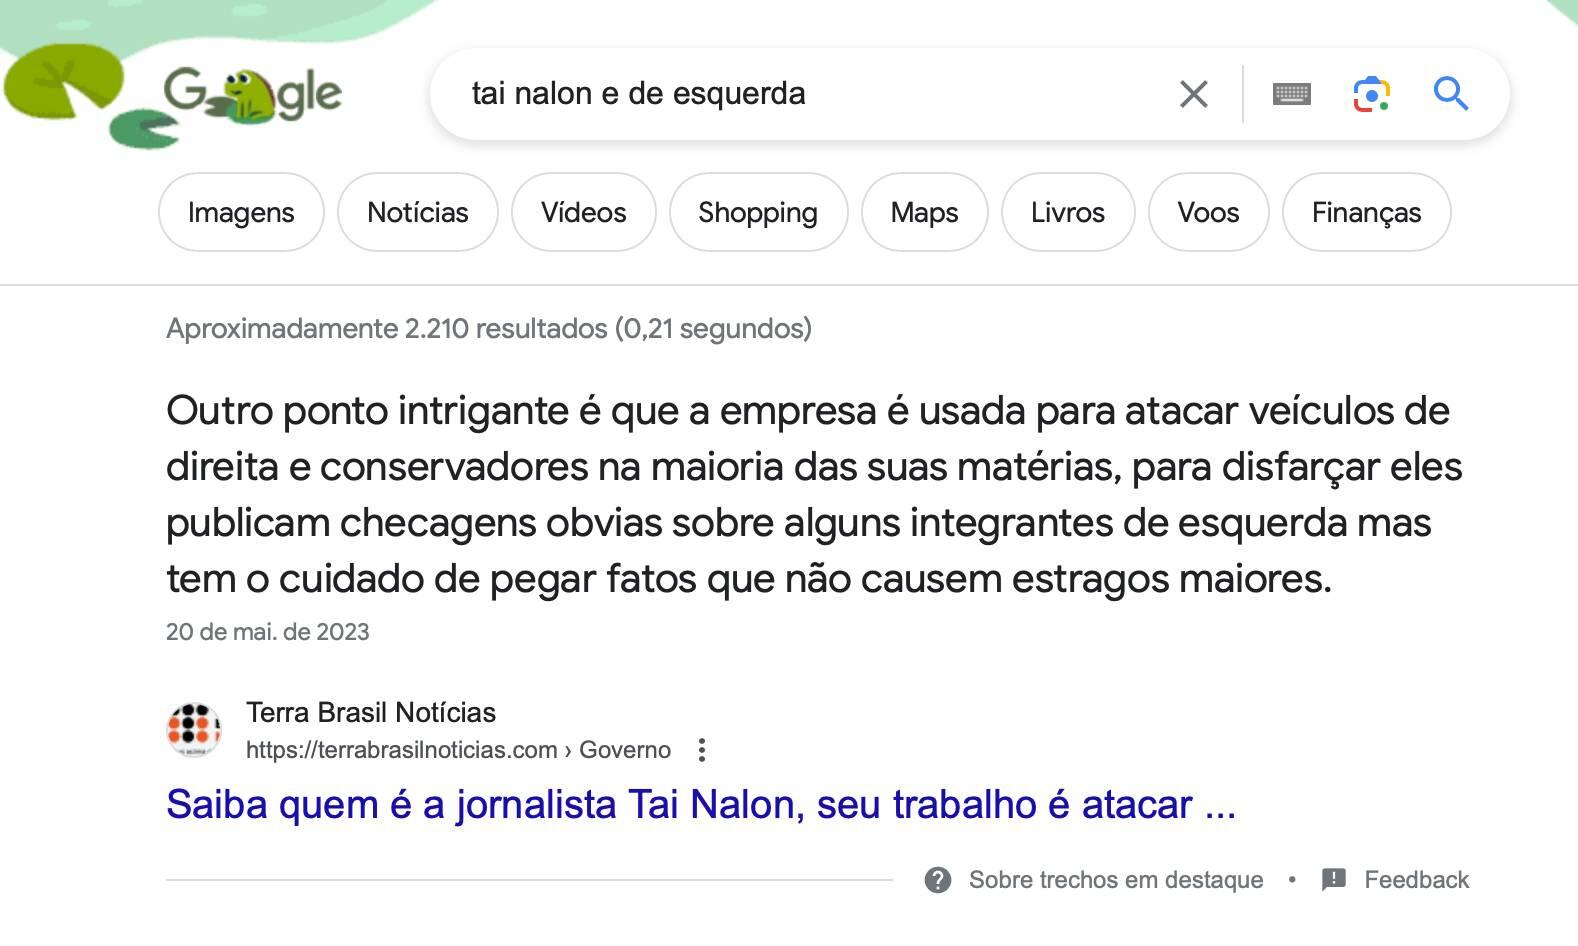 Trecho em destaque de busca do Google mostra texto desinformativo sobre Tai Nalon